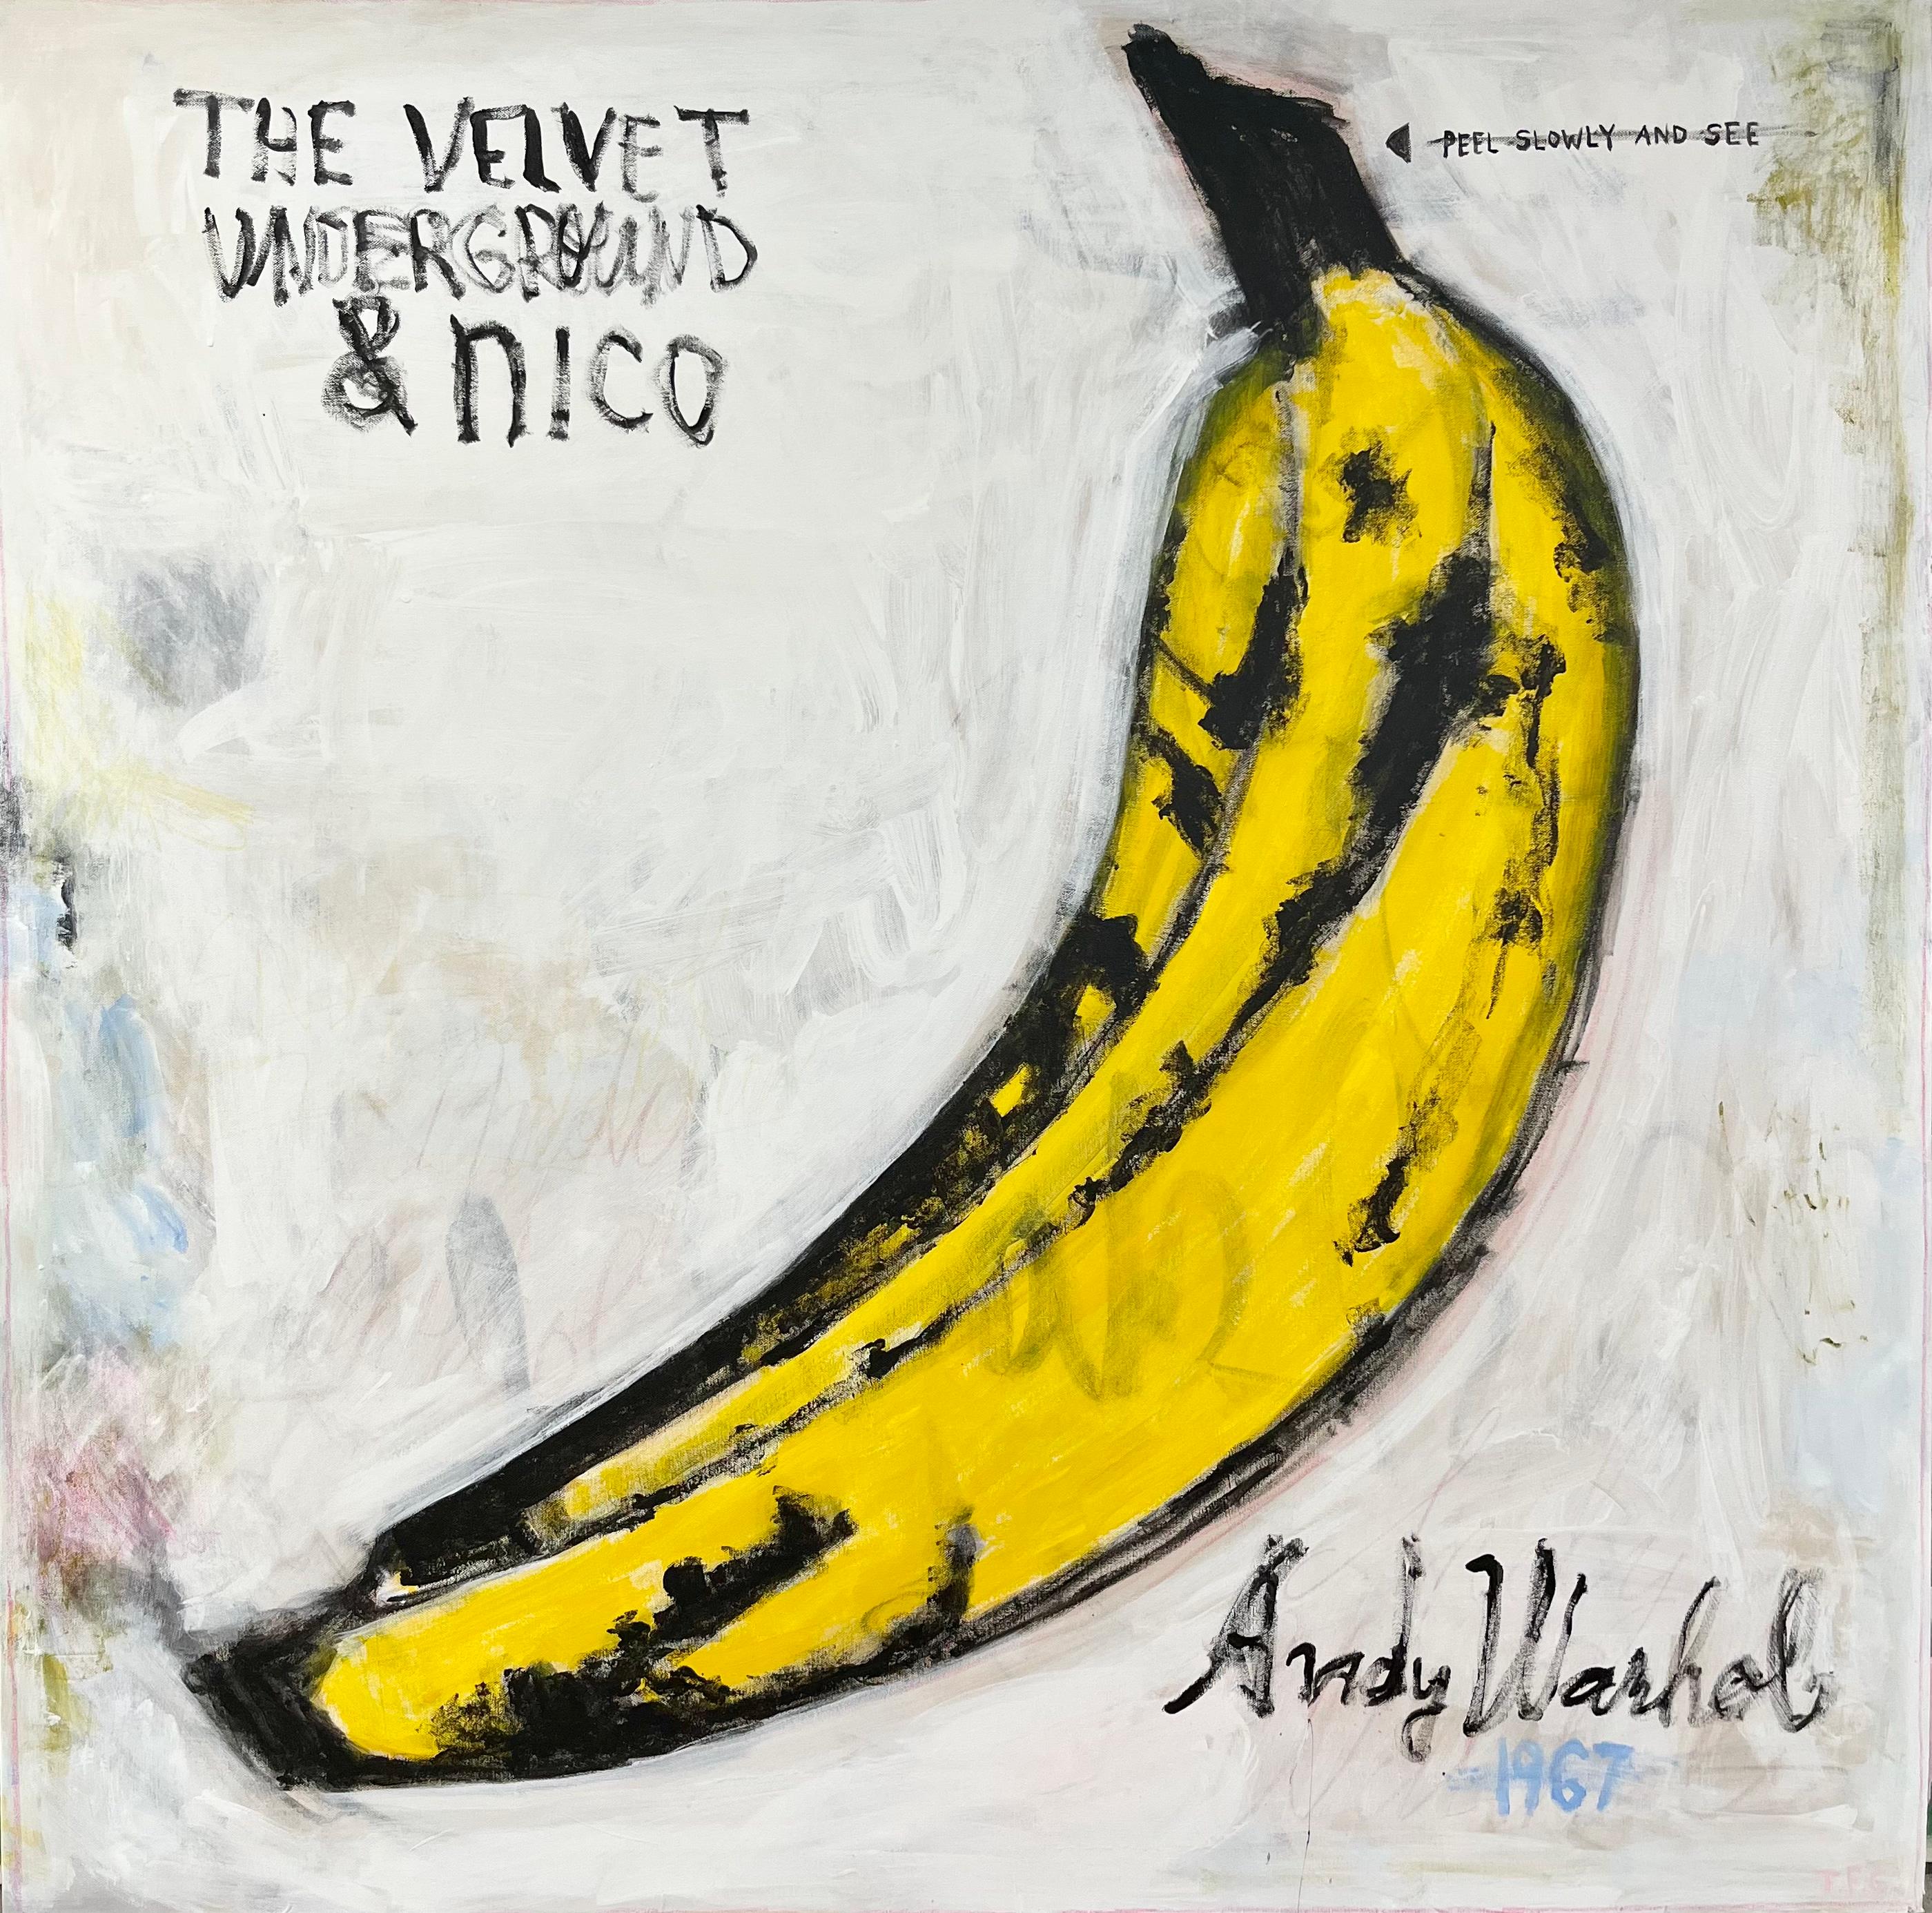 Tyler Casey Still-Life Painting - "Banana Album" Abstract Pop Art Andy Warhol Inspired Velvet Underground Painting